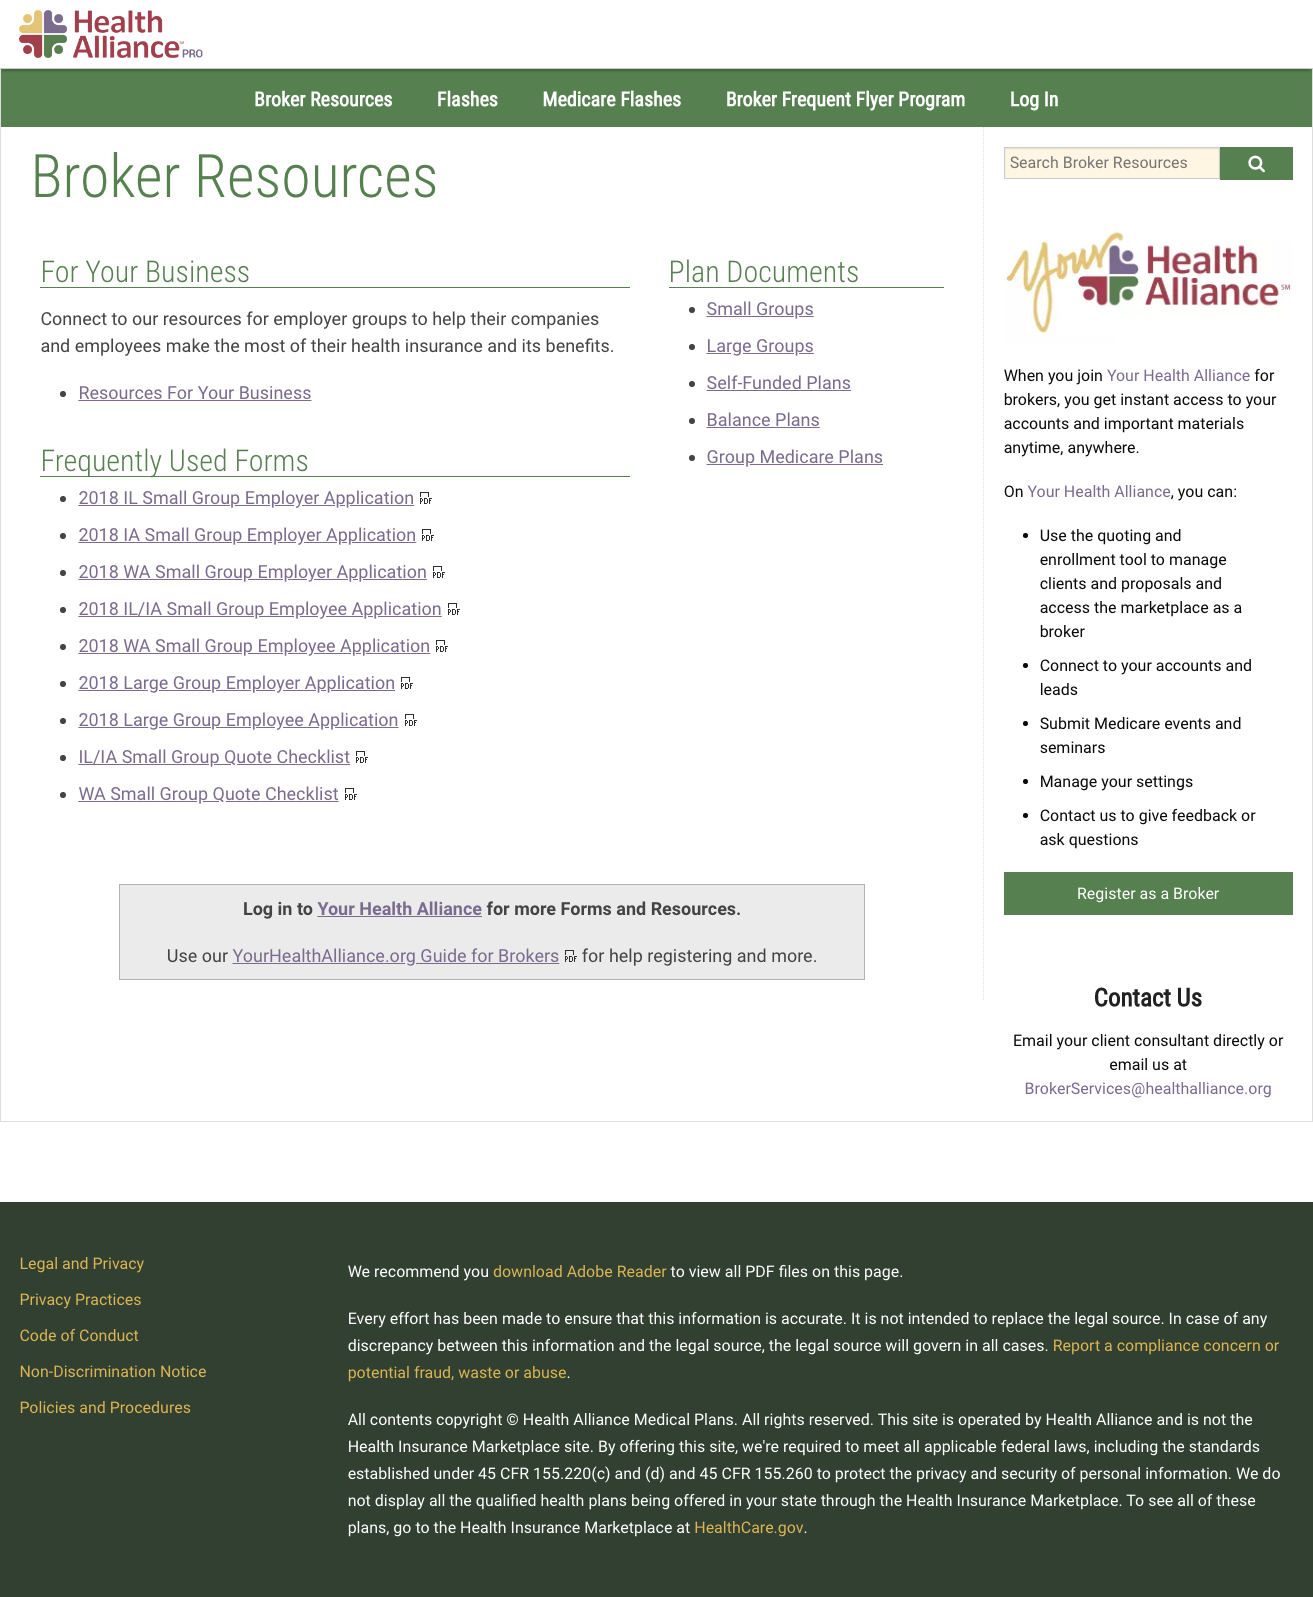 Broker resources landing page